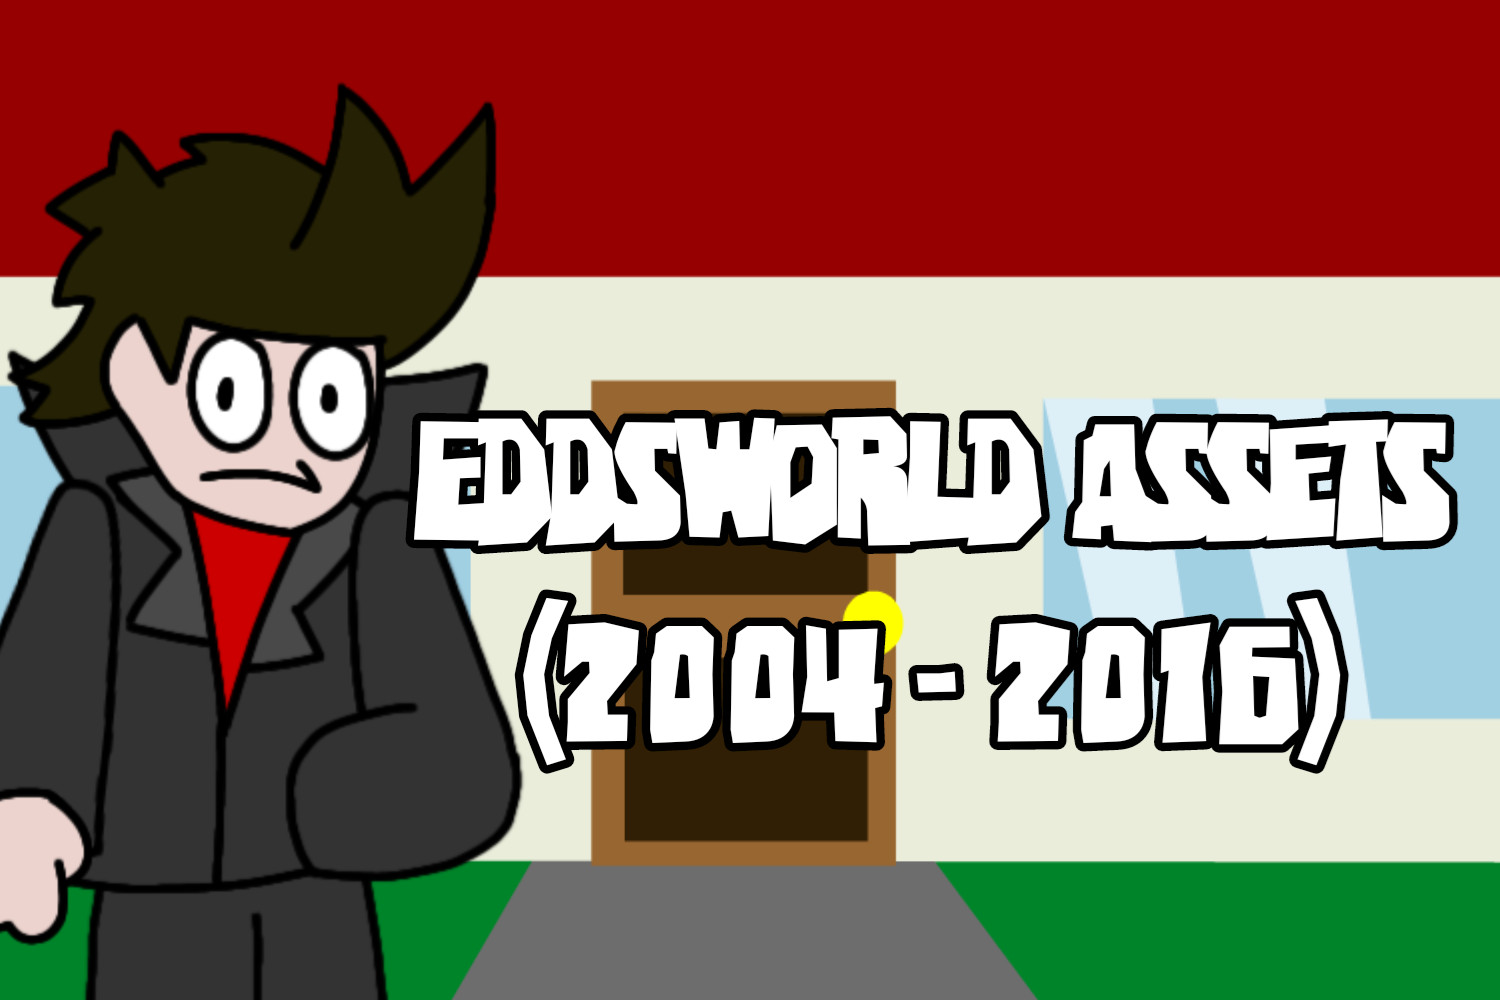 Wahat do you prefer, Eddsworld 2004 or 2016?-me 2004